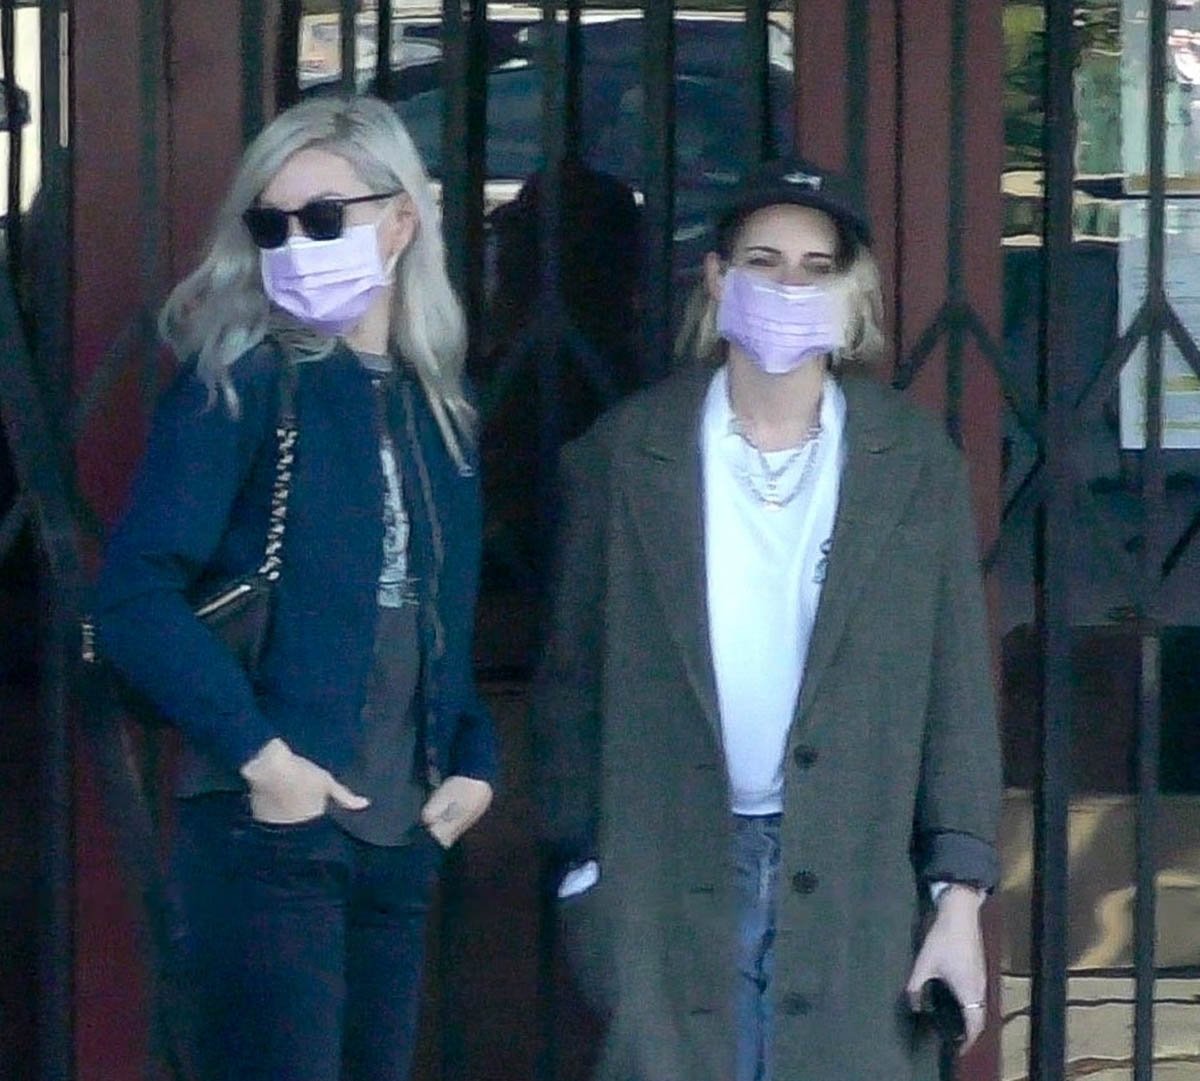 Fresh Off Success Of Happiest Season Kristen Stewart Is Seen Out With Girlfriend Dylan Meyer In Matching Masks In La